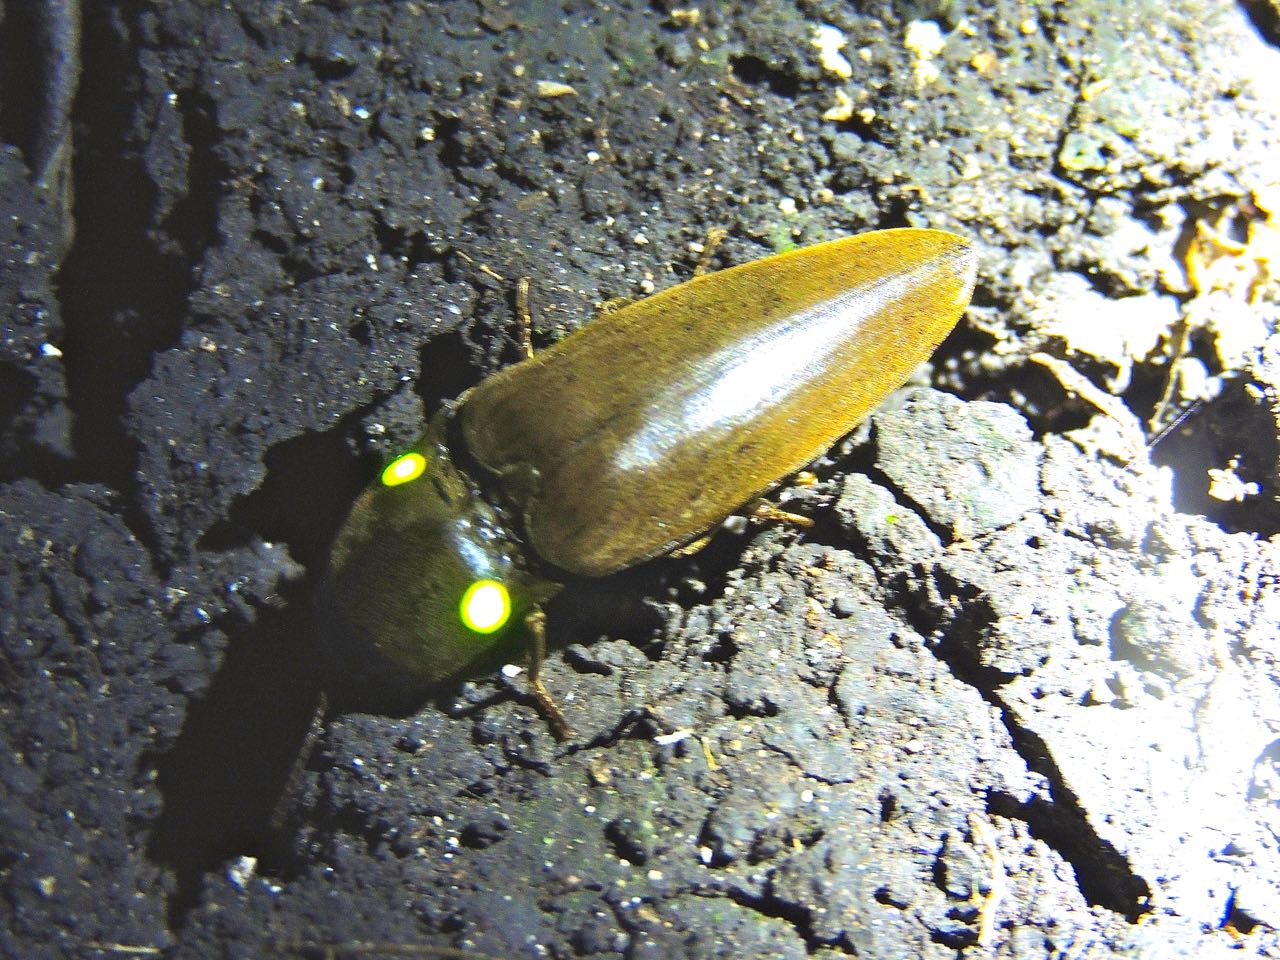 Bioluminescent Click Beetle